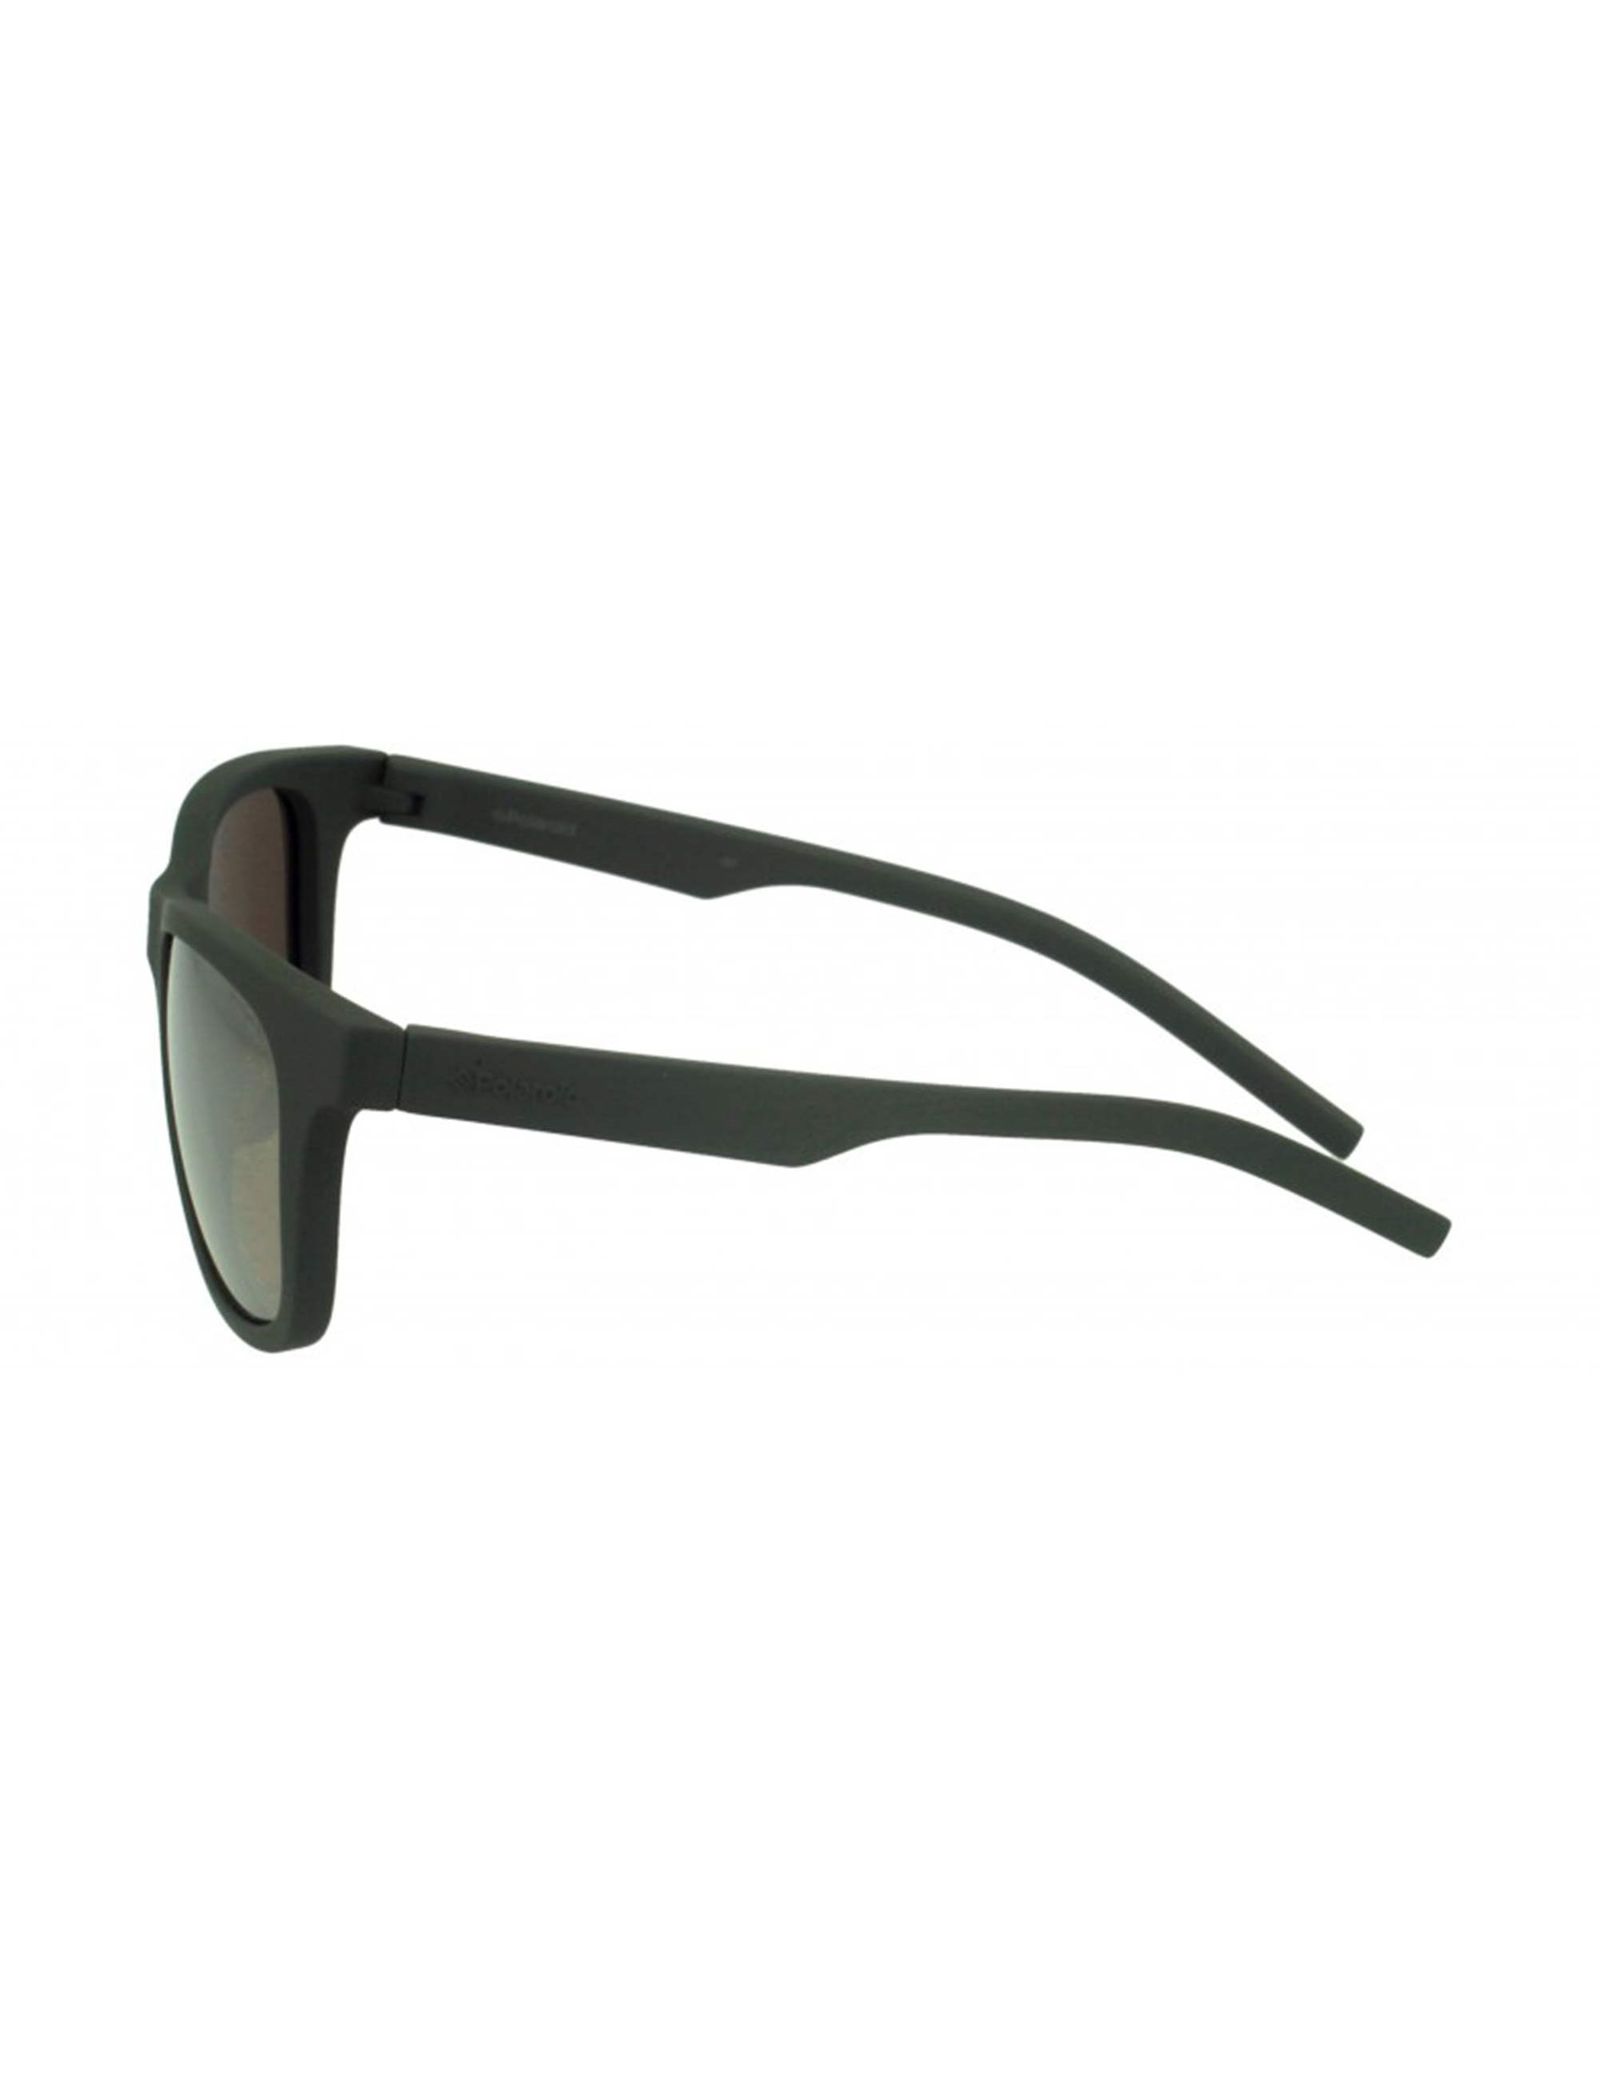 عینک آفتابی مستطیلی بزرگسال - پولاروید - سبز - 4